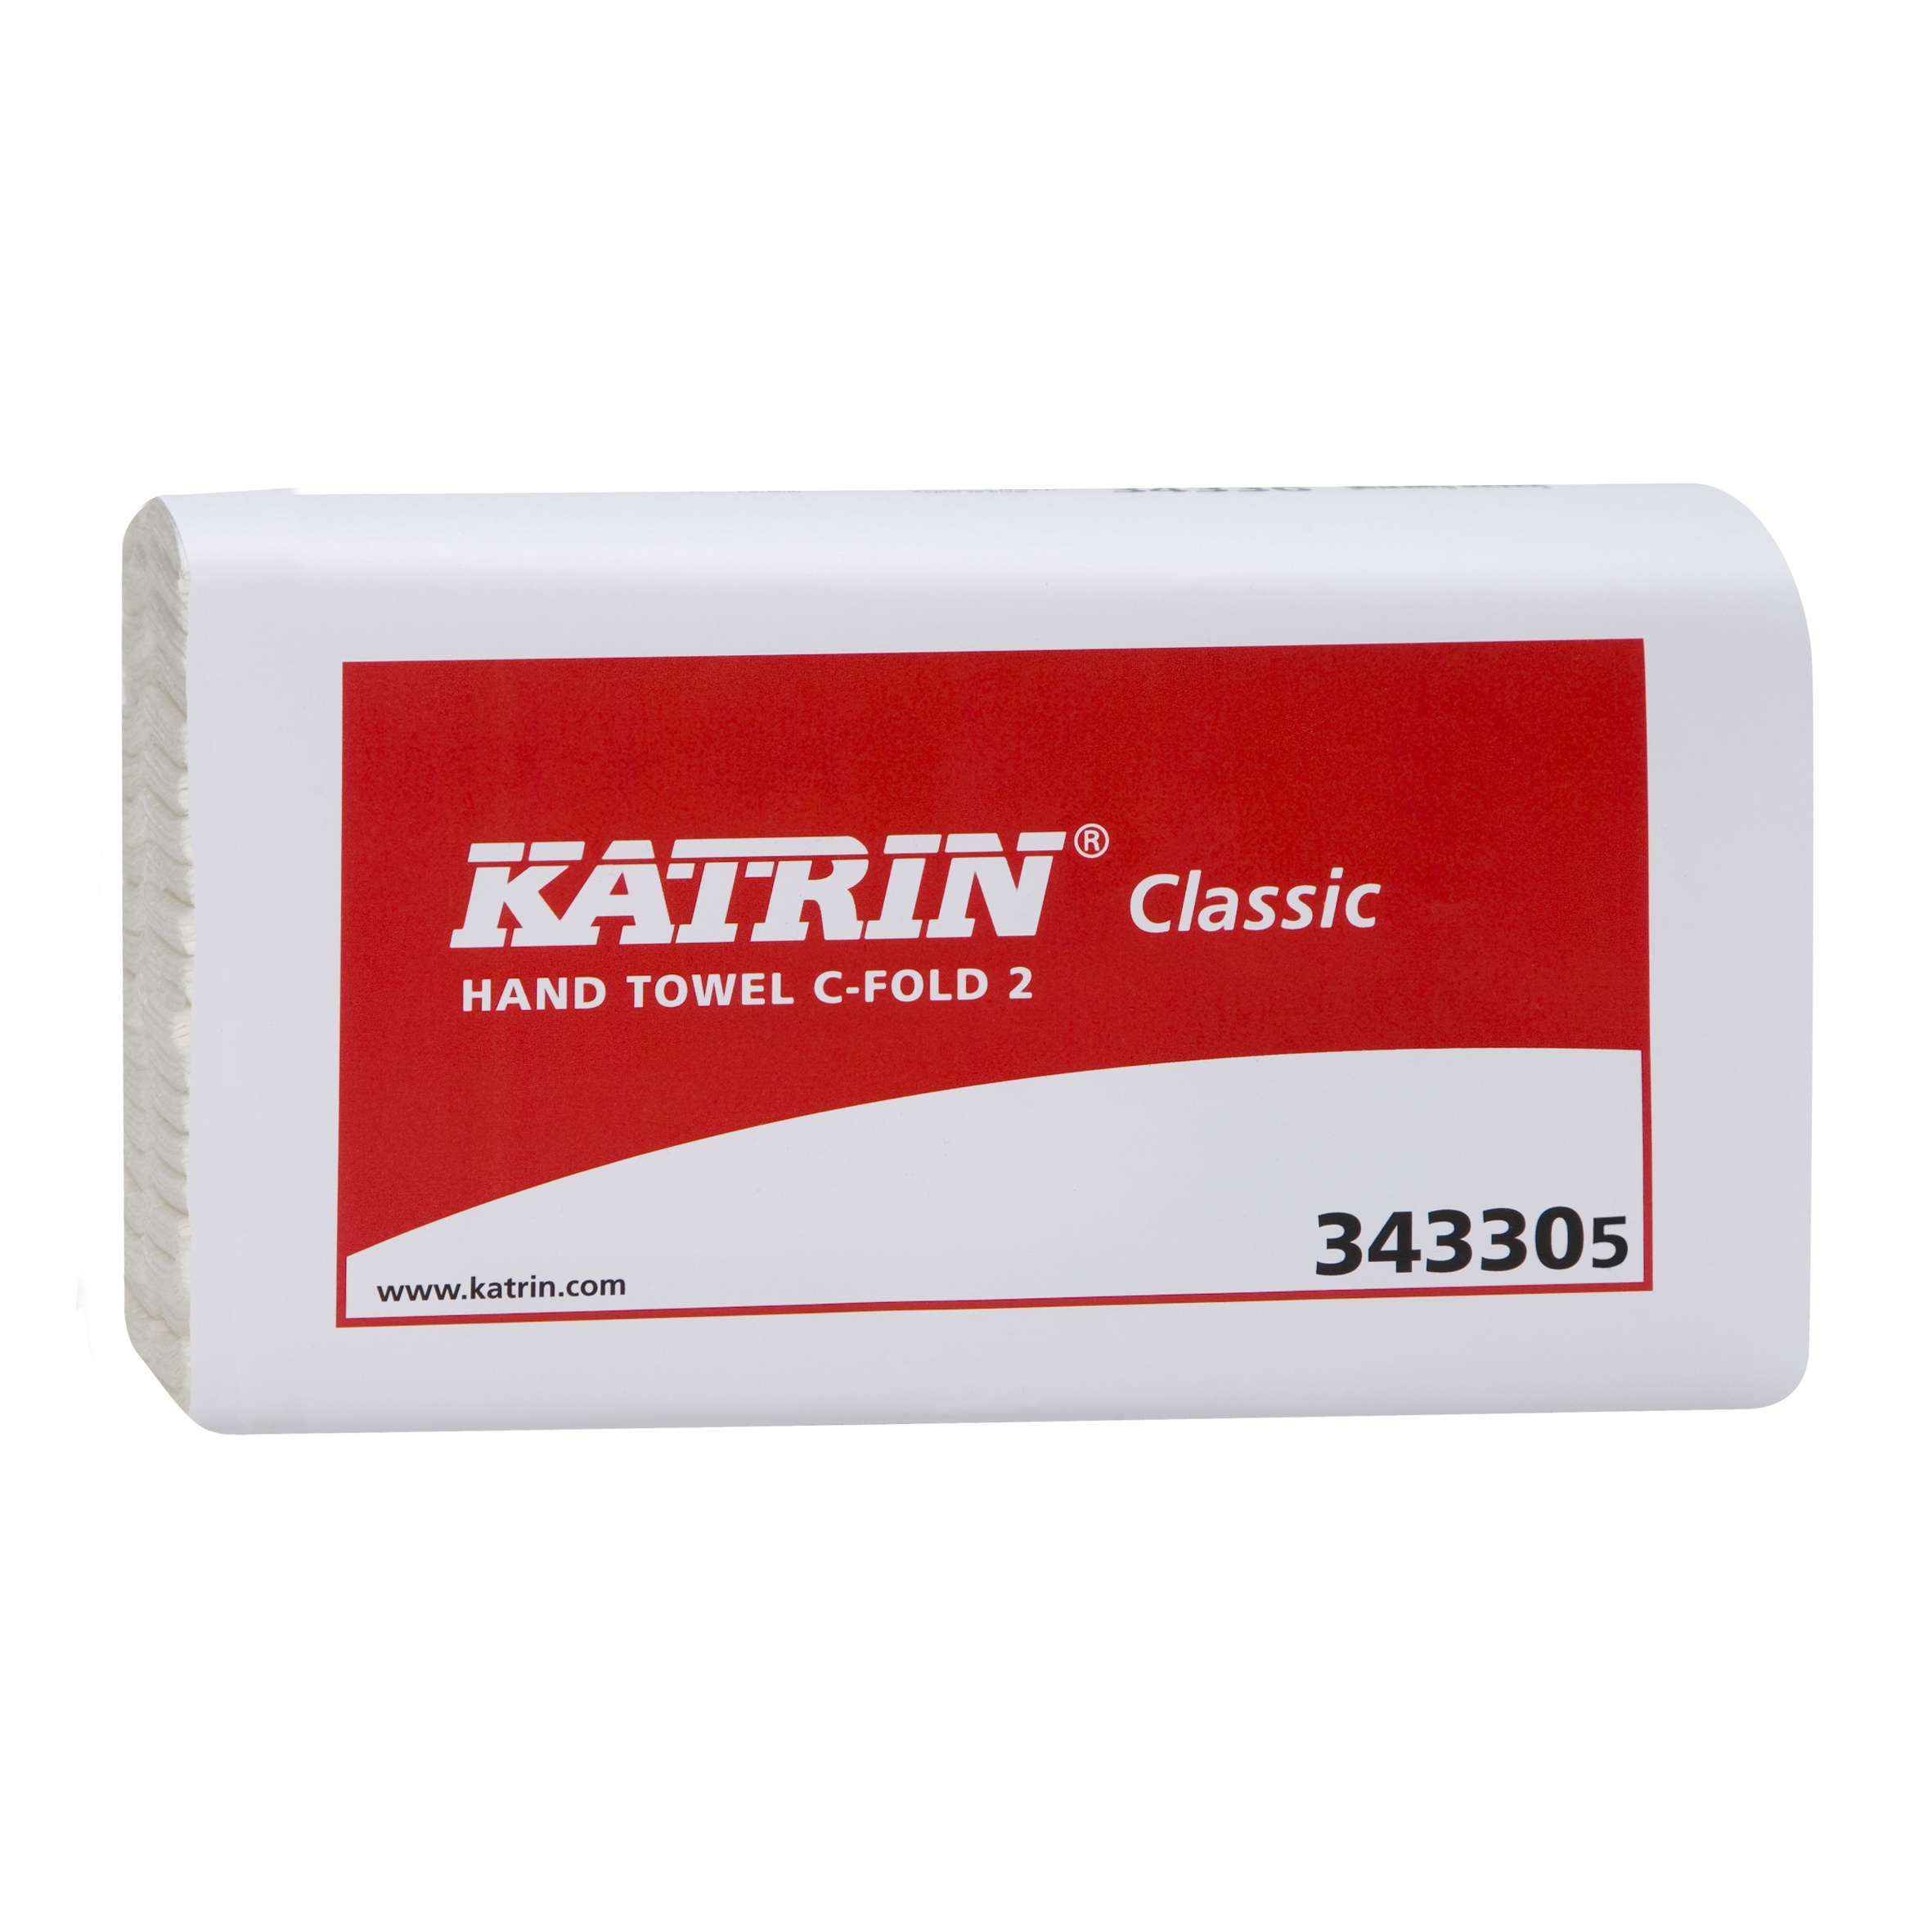 Katrin CLASSIC Hand Towel C-Fold 2 343305